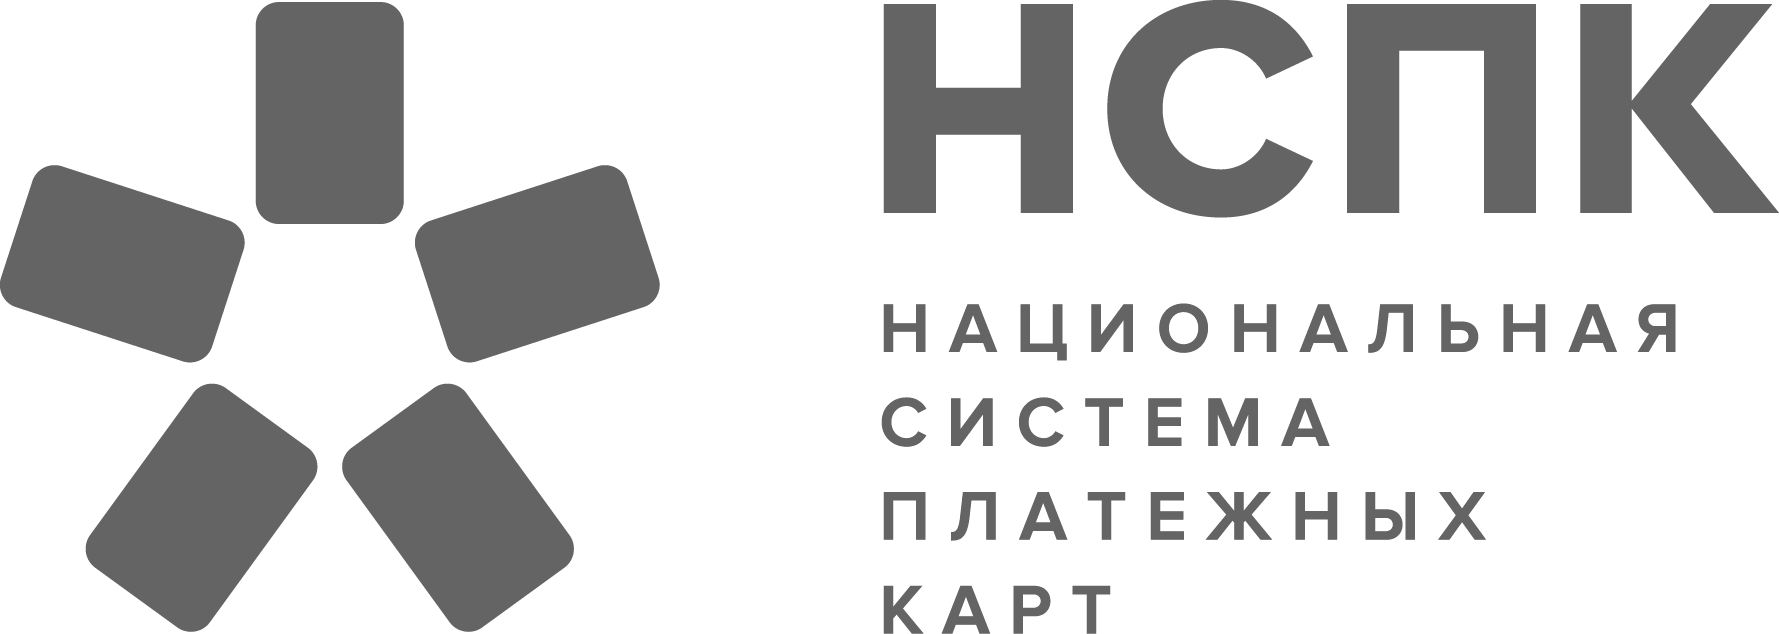 NSPK logo